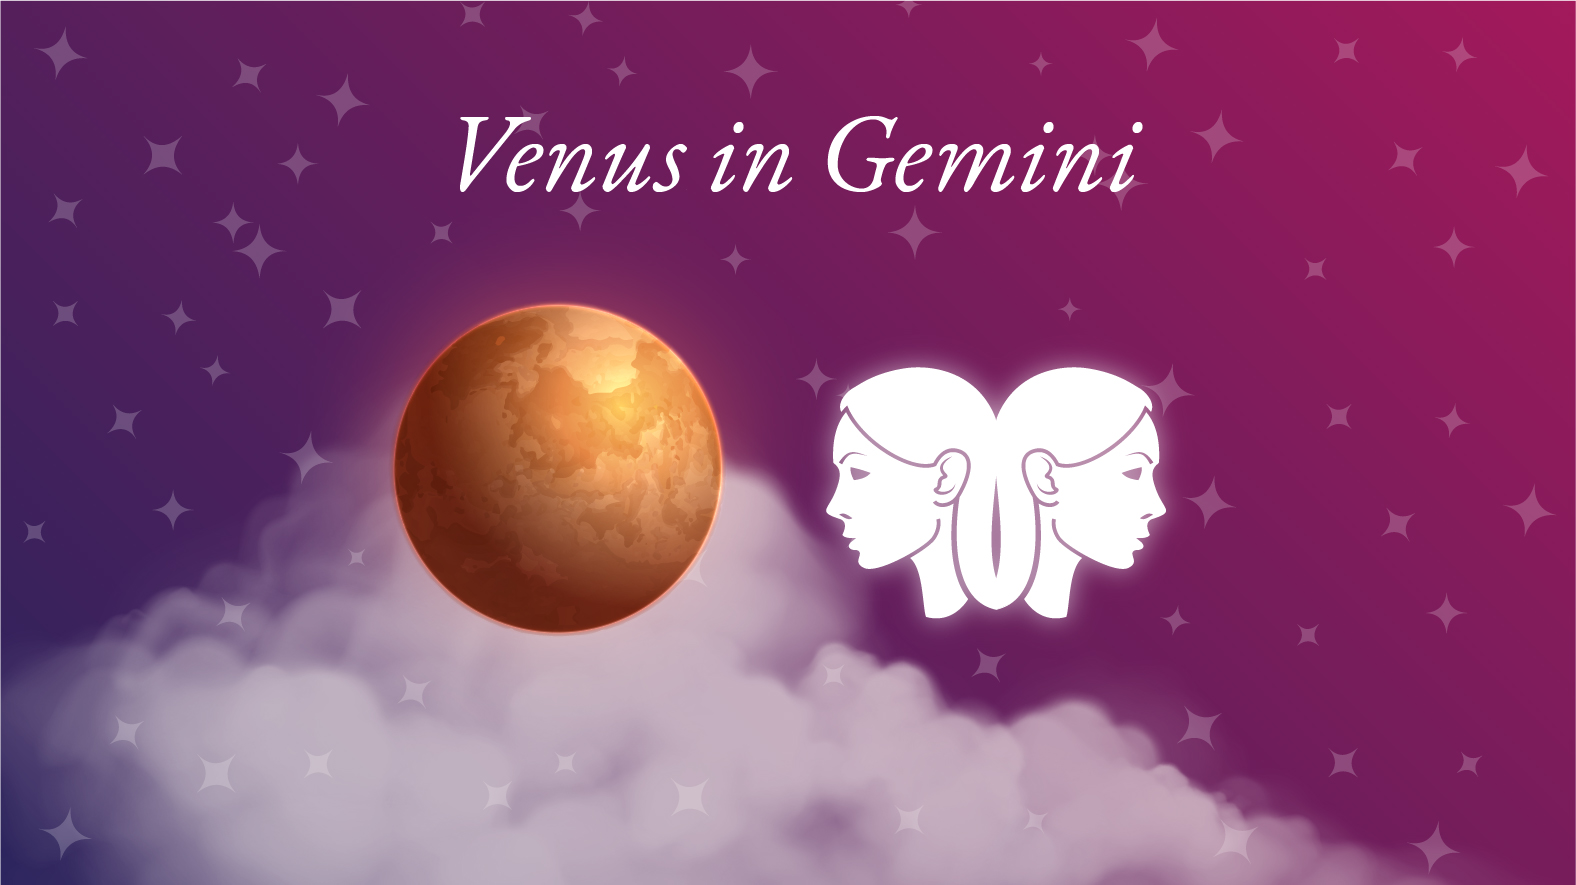 Venus in Gemini